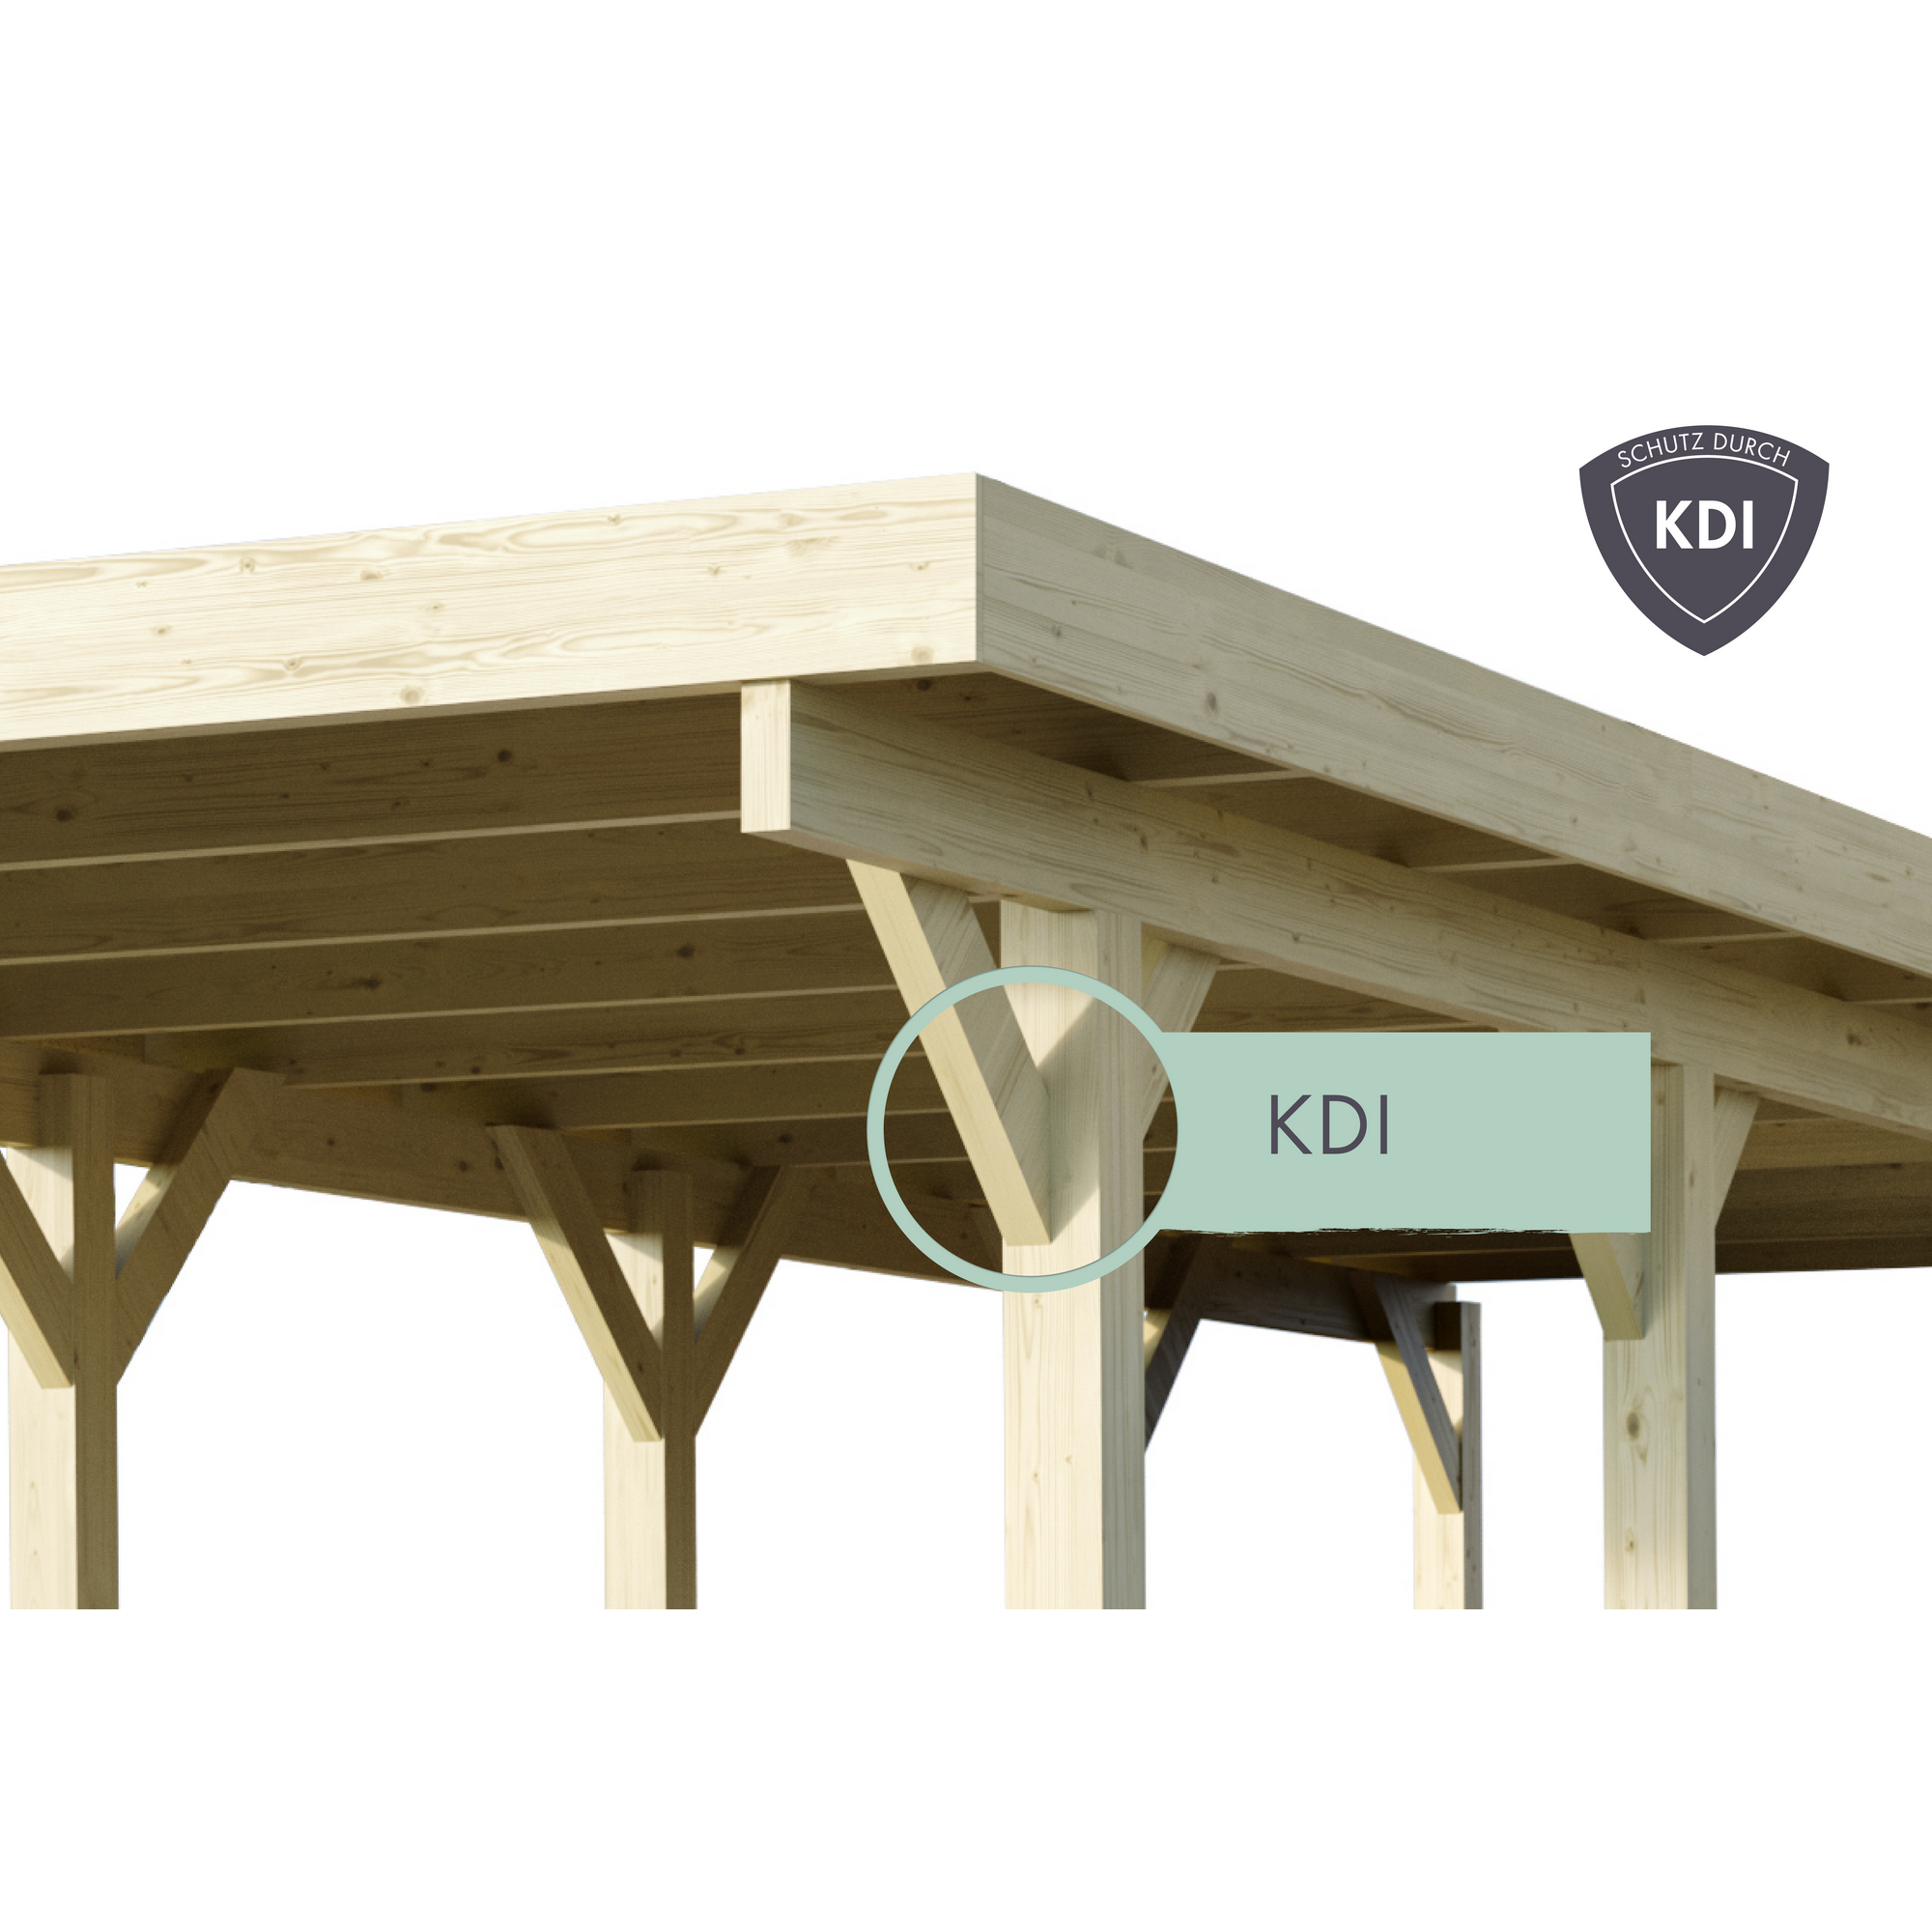 Doppelcarport 'Carlos 3' Kiefer PVC-Dach mit zwei Einfahrtsbögen 860 x 598 x 237 cm + product picture